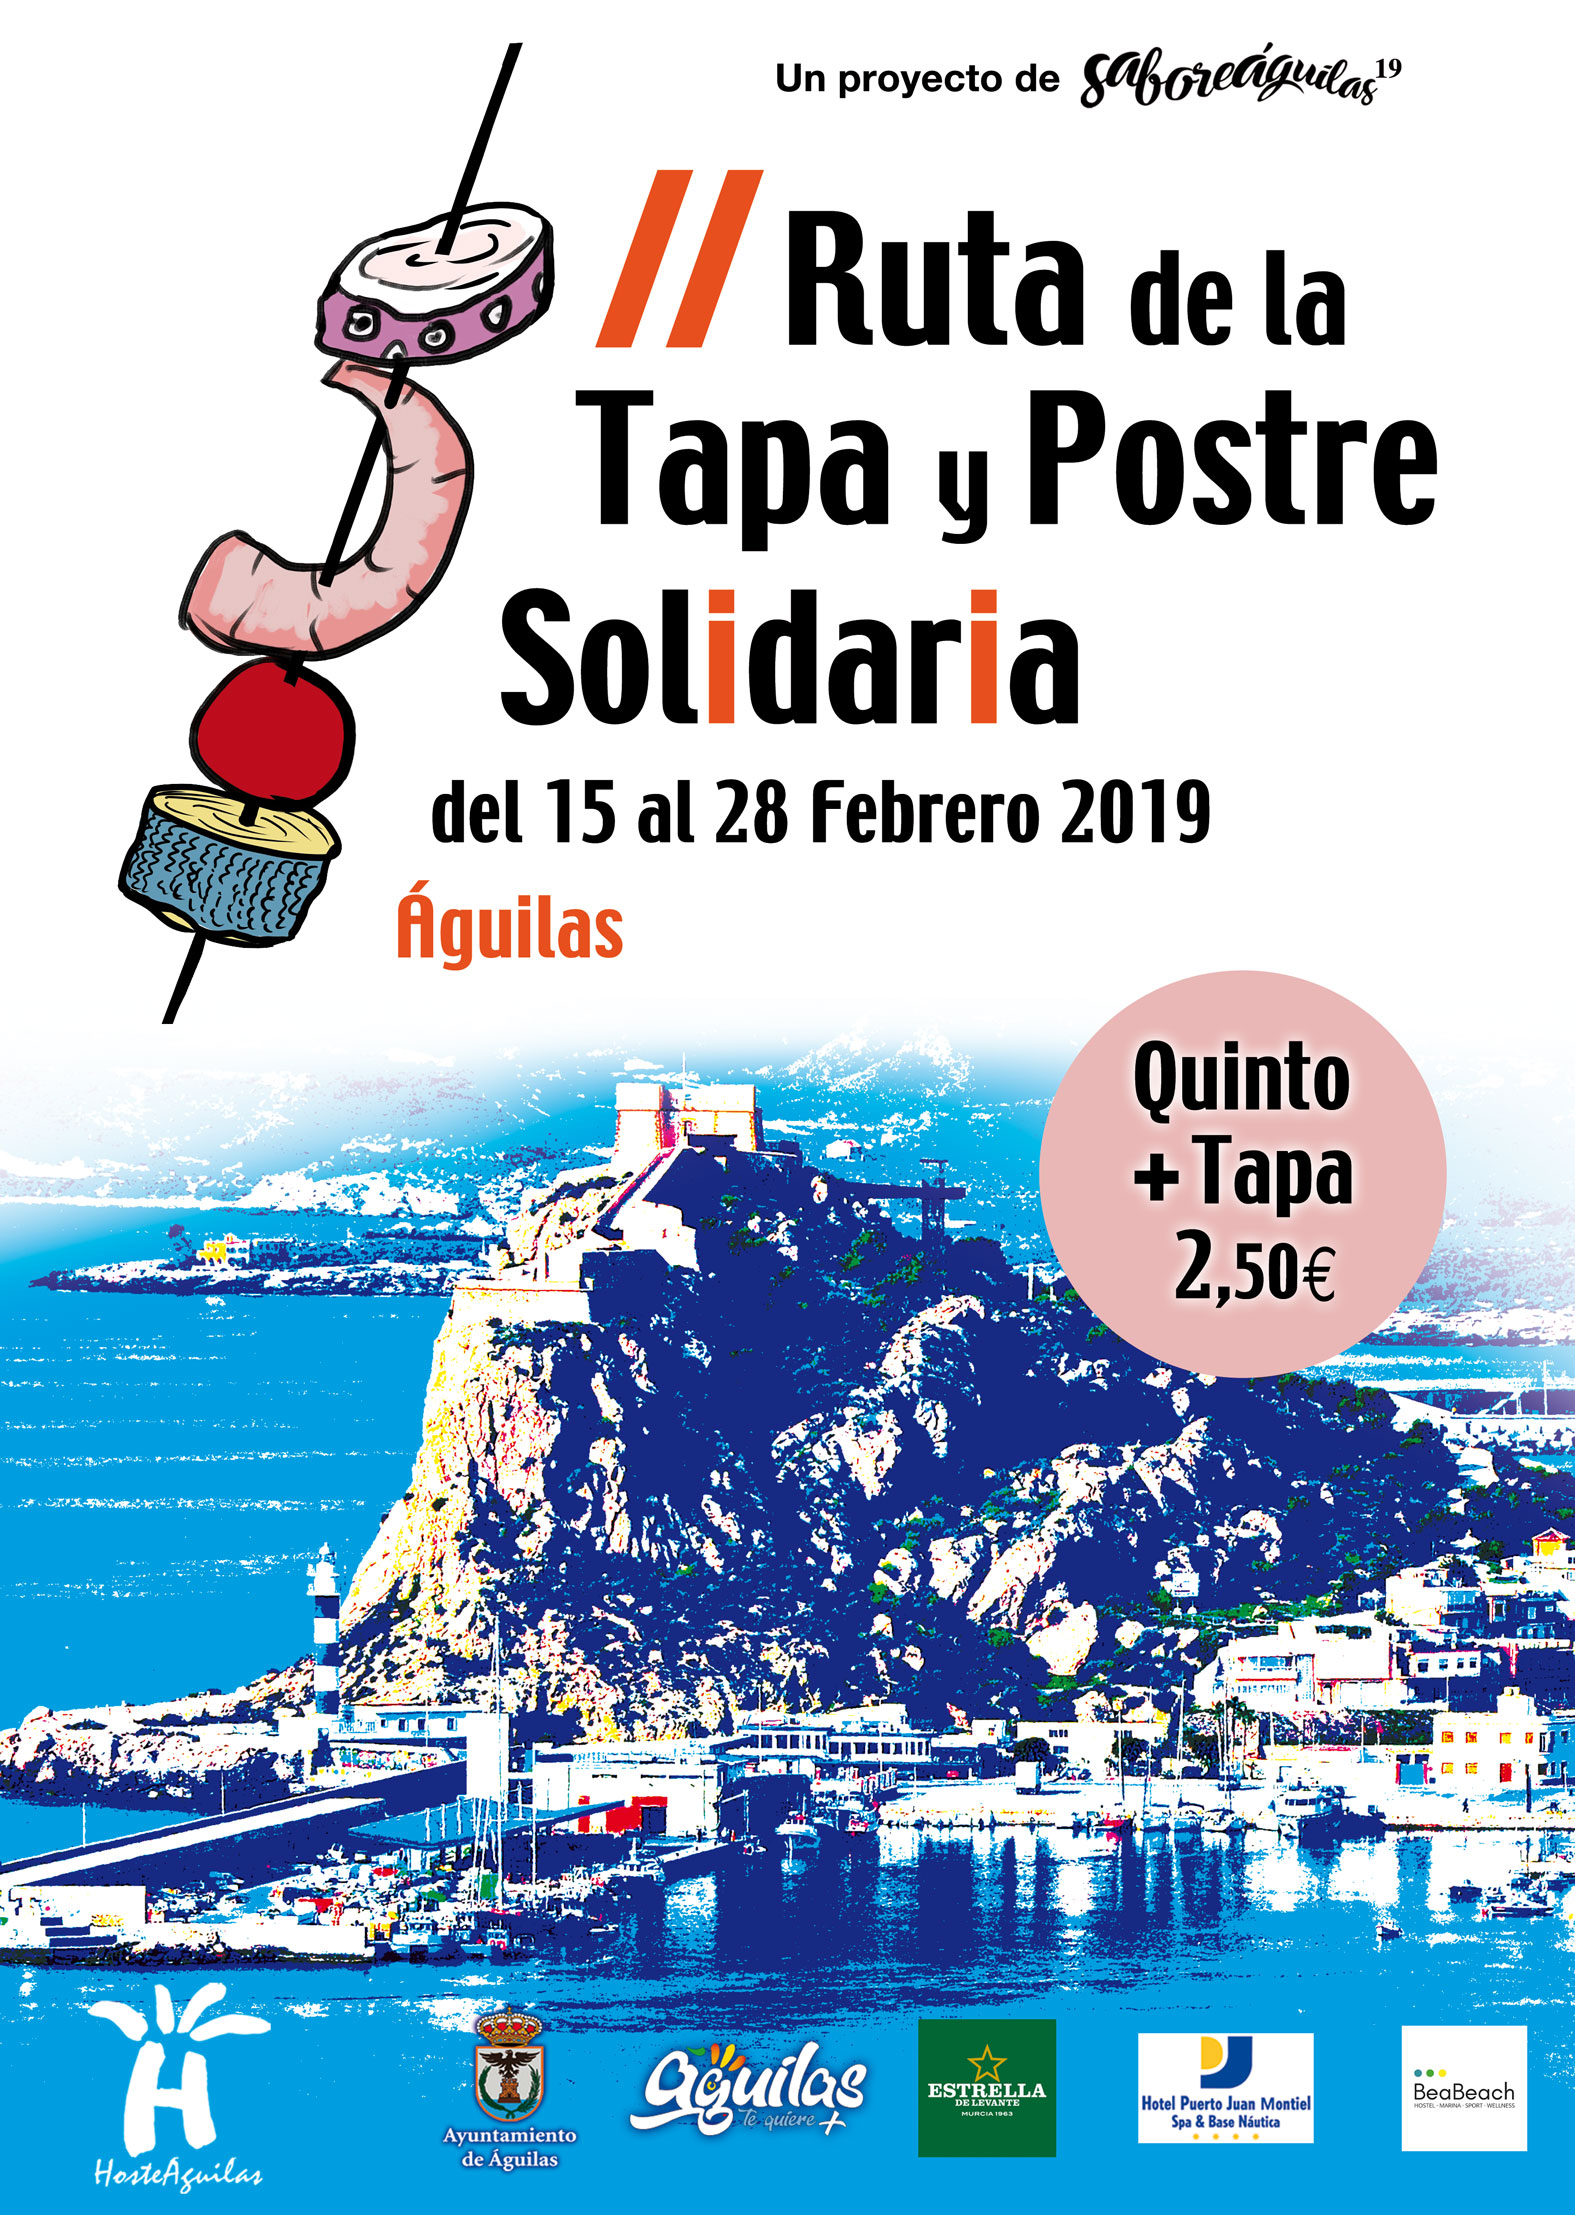  Informacin Ruta de la Tapa y Postre Solidaria 2019.